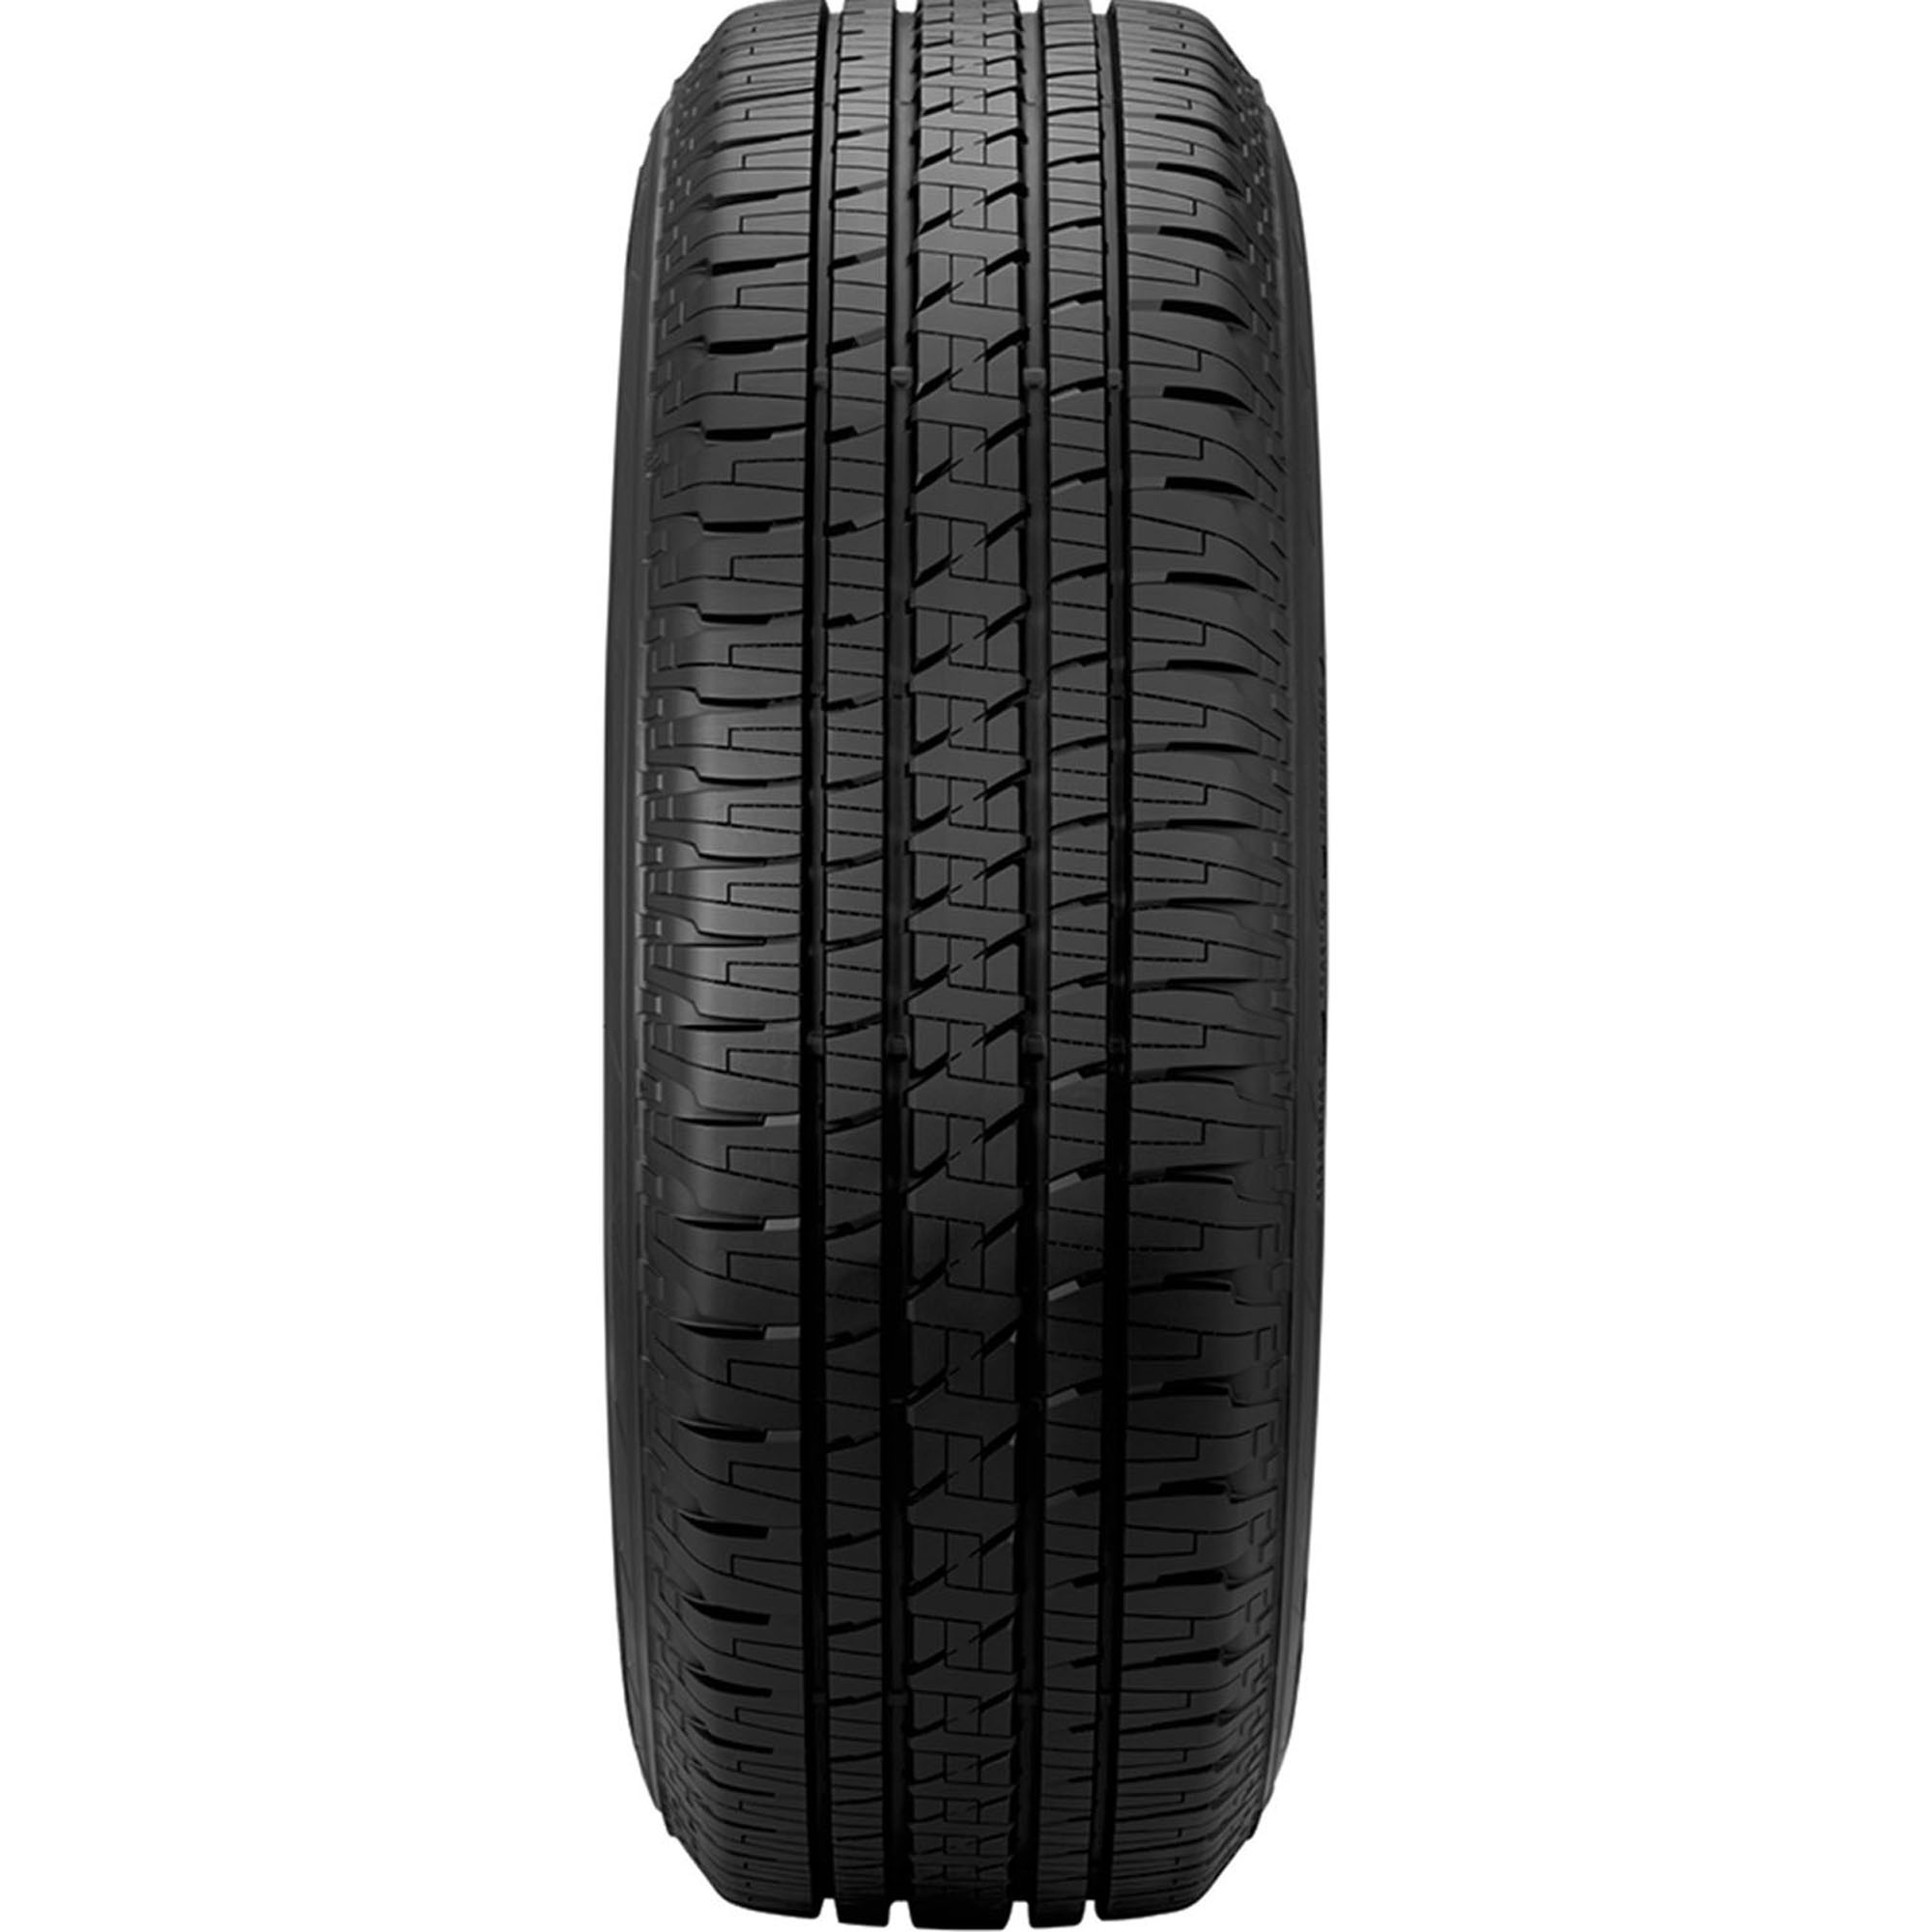 Bridgestone Dueler H/L Alenza Plus All Season P275/55R20 111H SUV/Crossover Tire - image 3 of 6